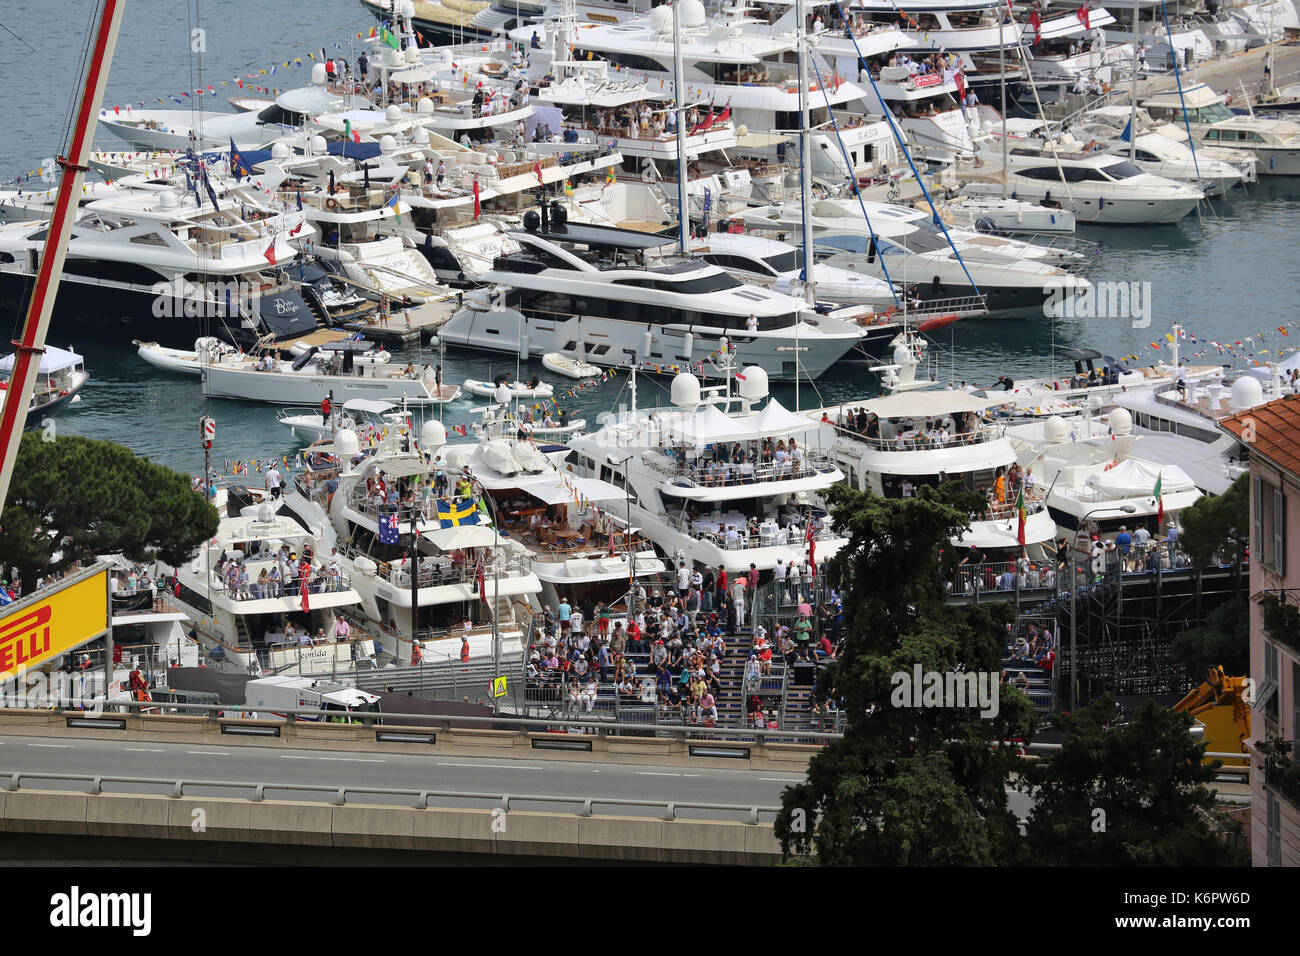 La Condamine, Monaco - May 28, 2016: Luxury Yachts are Parked in the Port Hercule for the Monaco Formula 1 Grand Prix 2016 Stock Photo